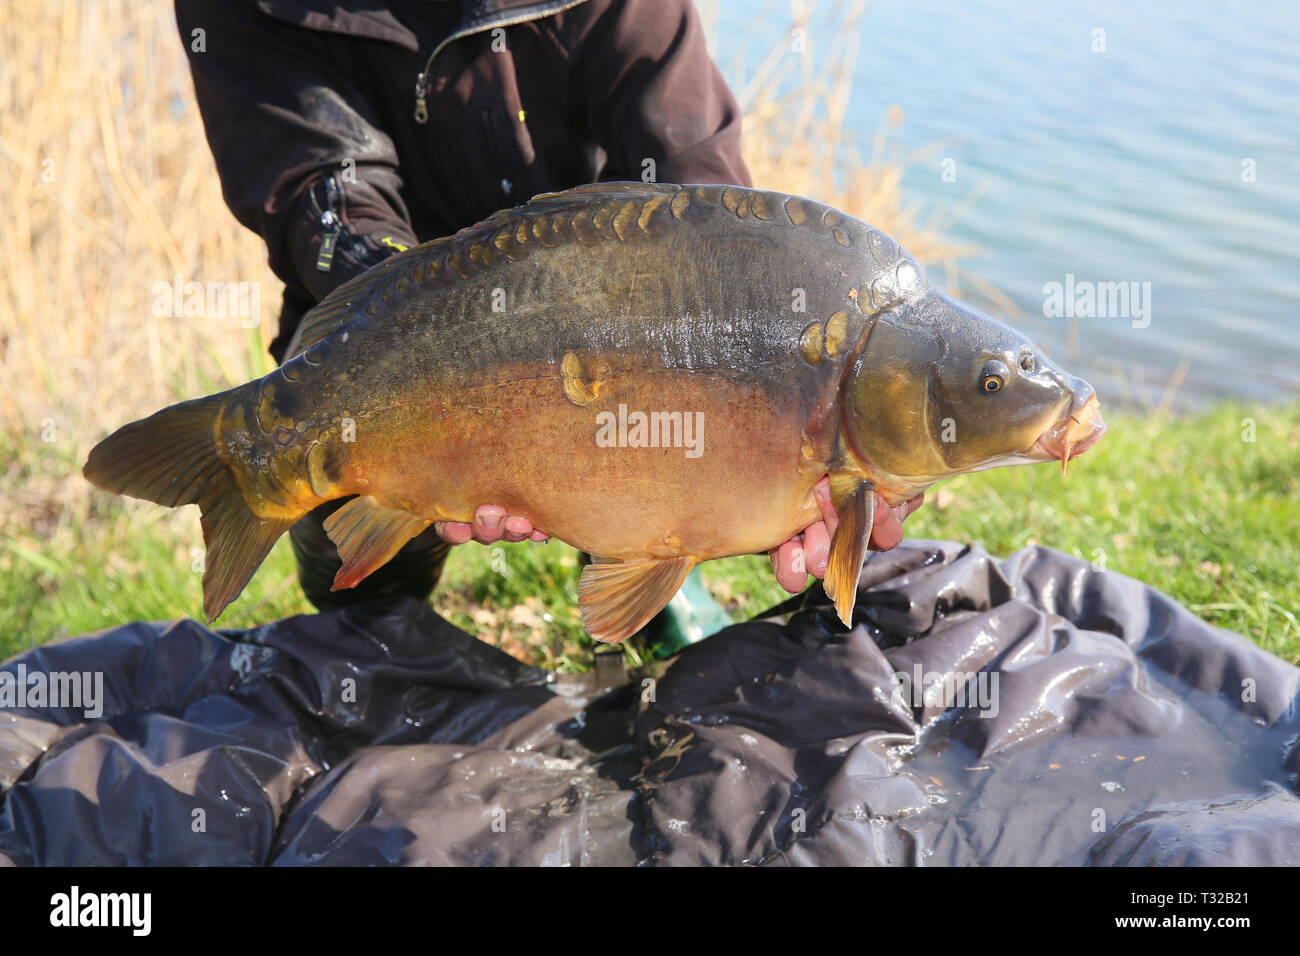 Carp is an atracine fish for the angler Stock Photo